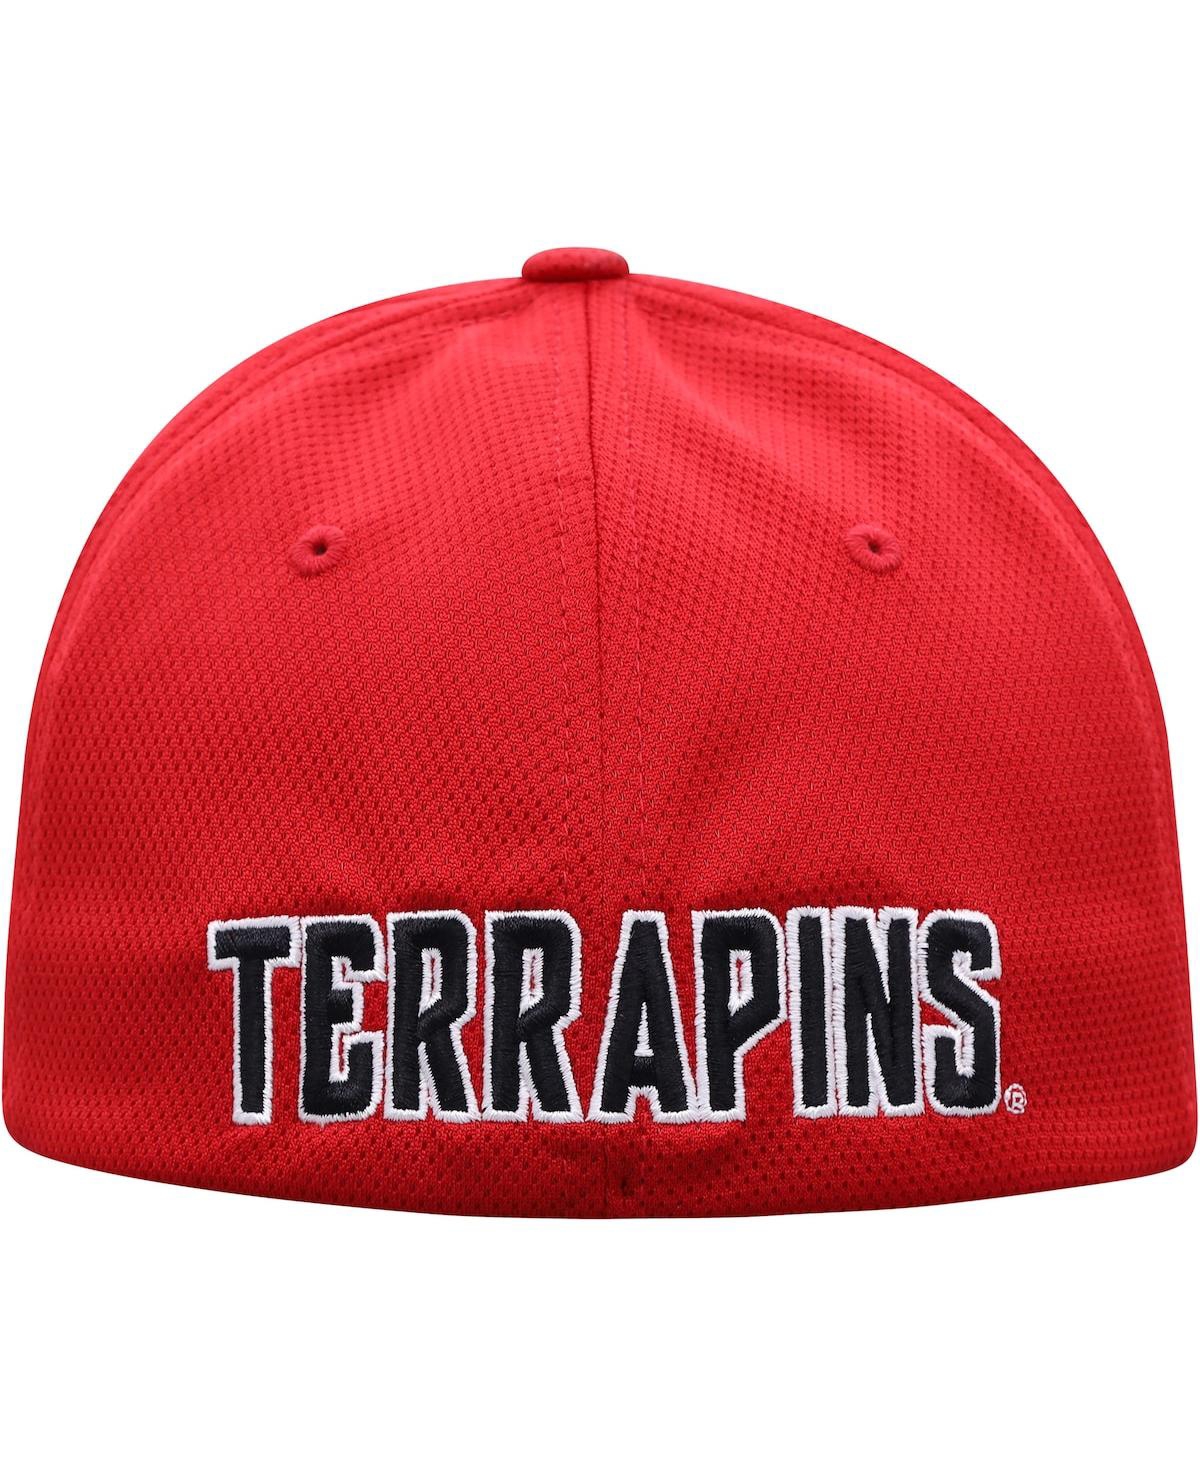 Shop Top Of The World Men's  Red Maryland Terrapins Reflex Logo Flex Hat